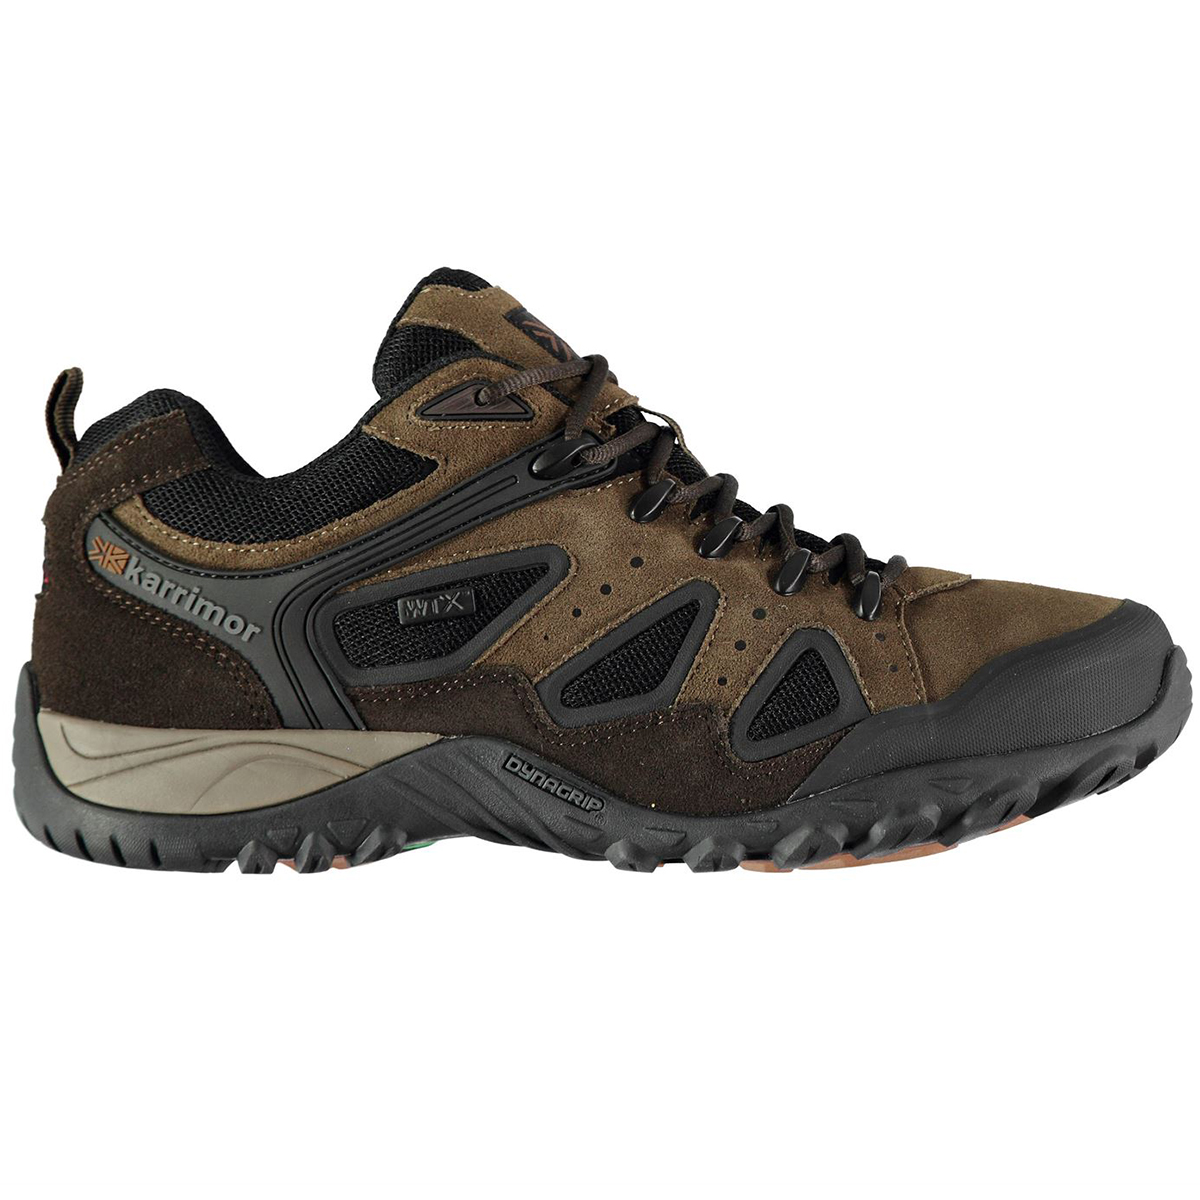 Karrimor Men's Ridge Wtx Waterproof Low Hiking Shoes - Brown, 12